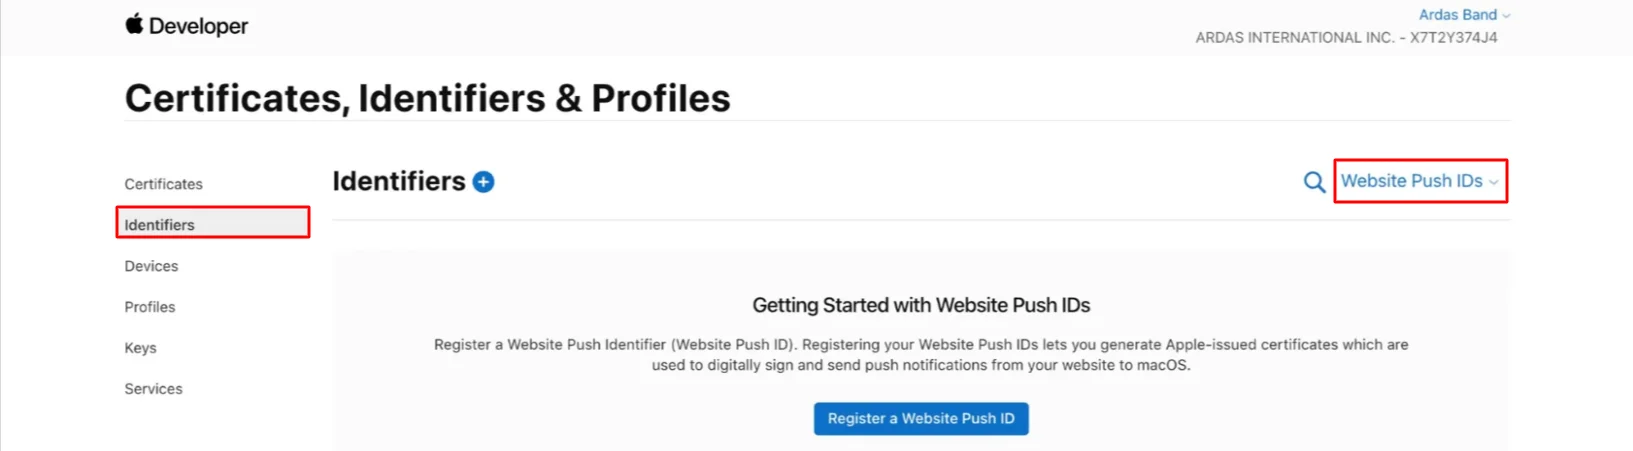 Registration of Web Push ID